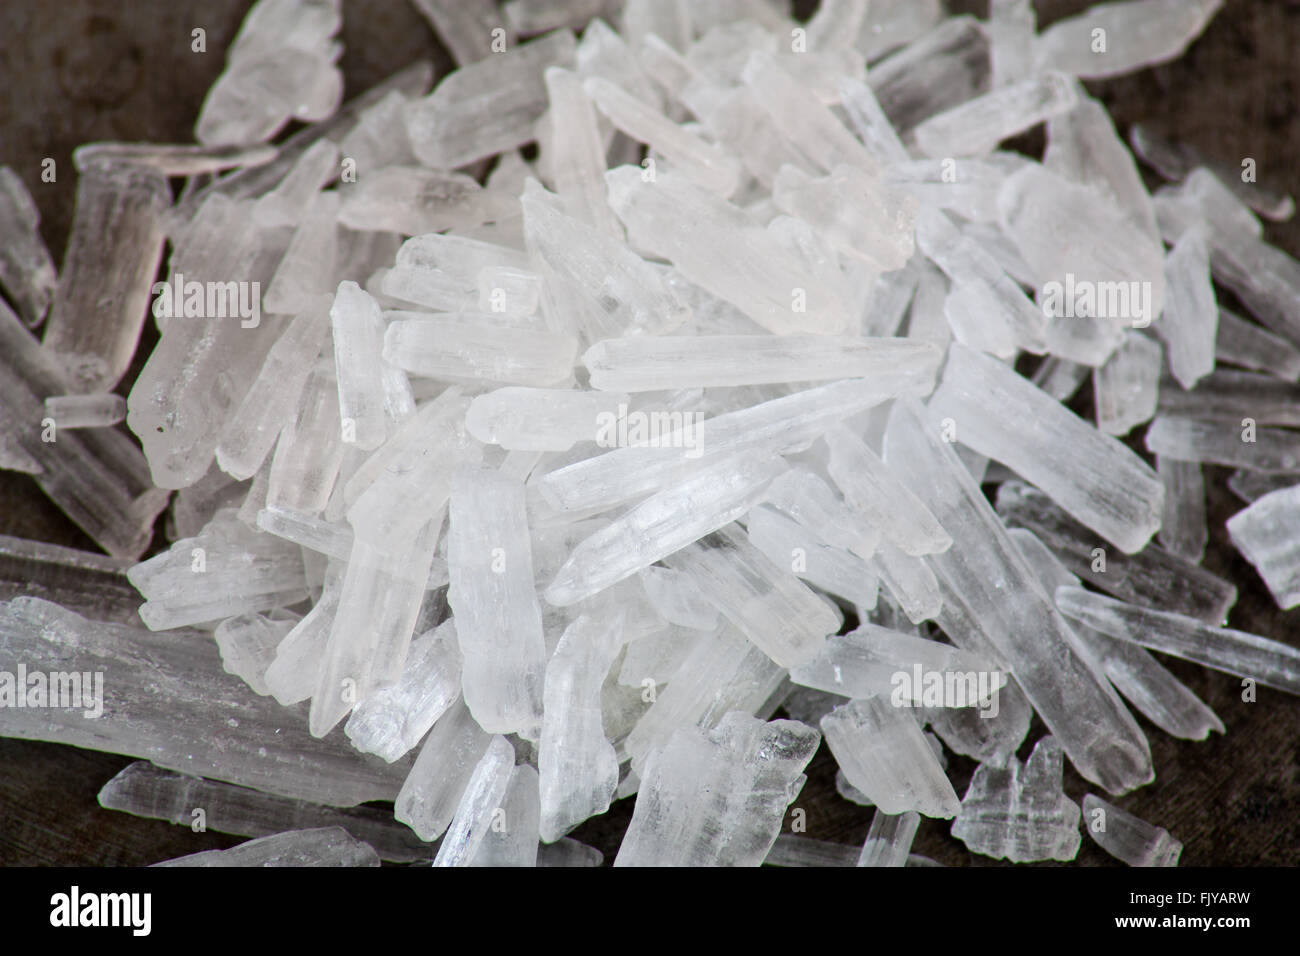 Methamphetamine also known as crystal meth Stock Photo